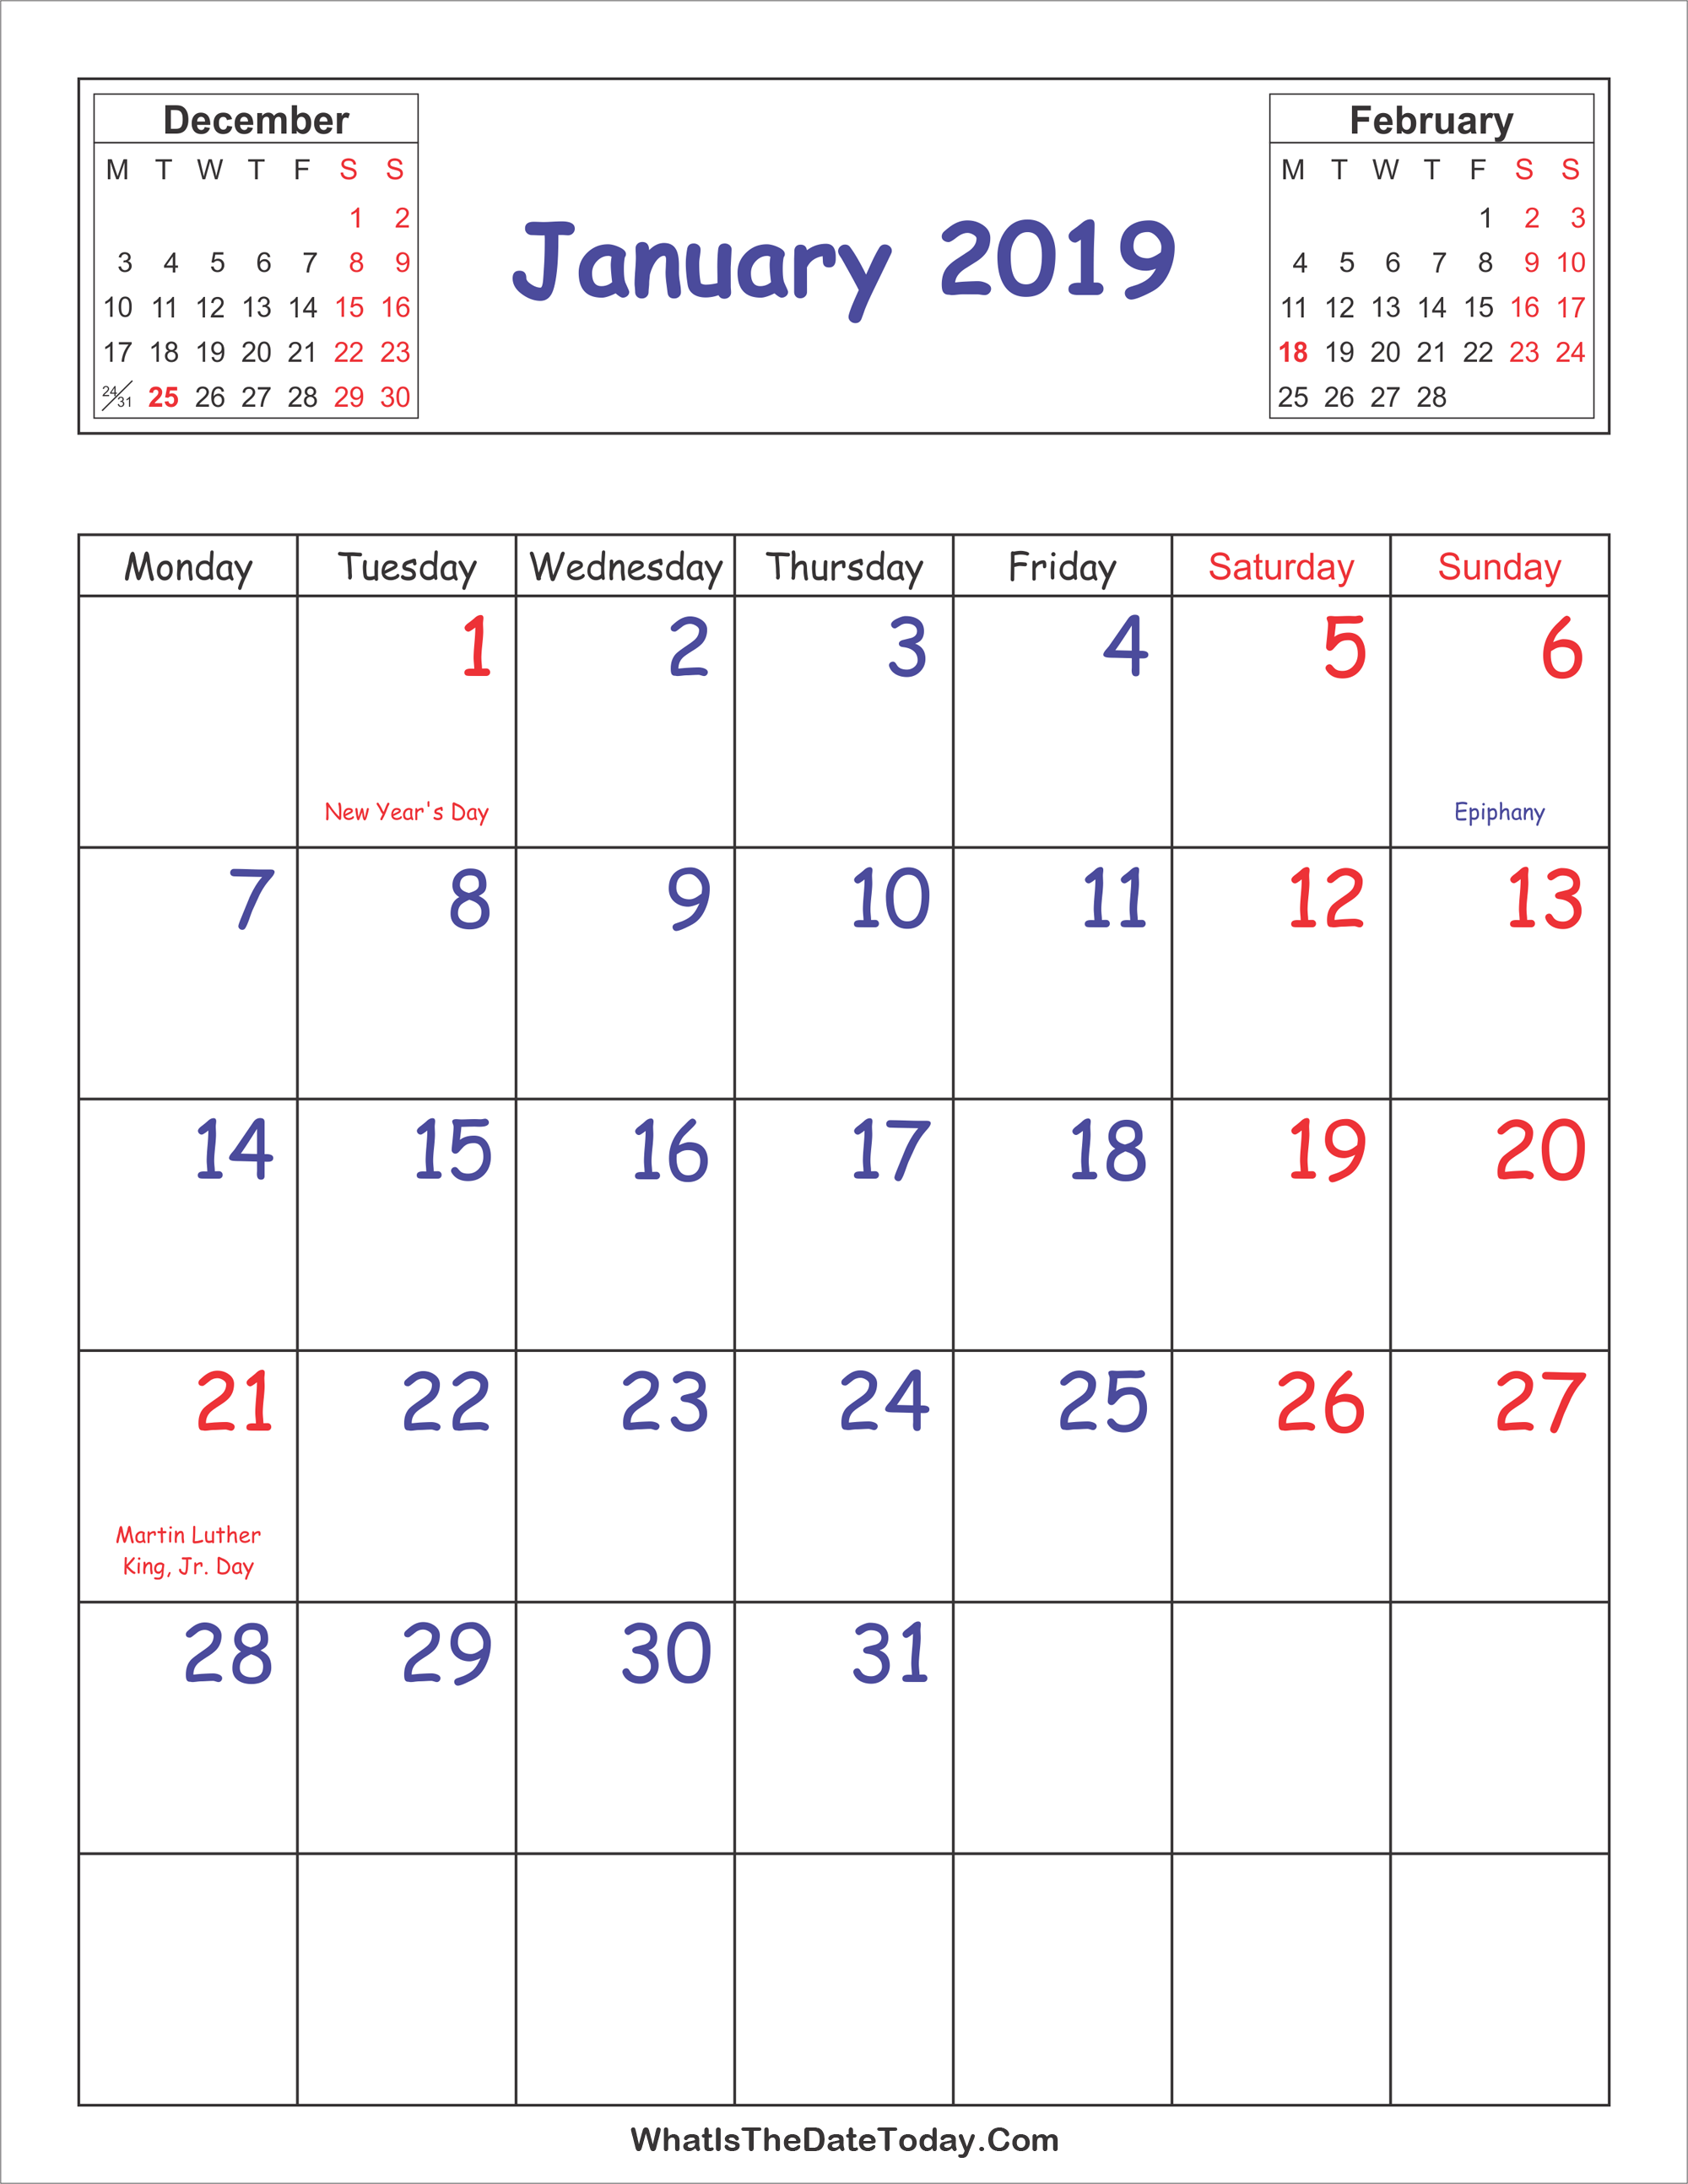 printable-2019-calendar-january-vertical-layout-whatisthedatetoday-com